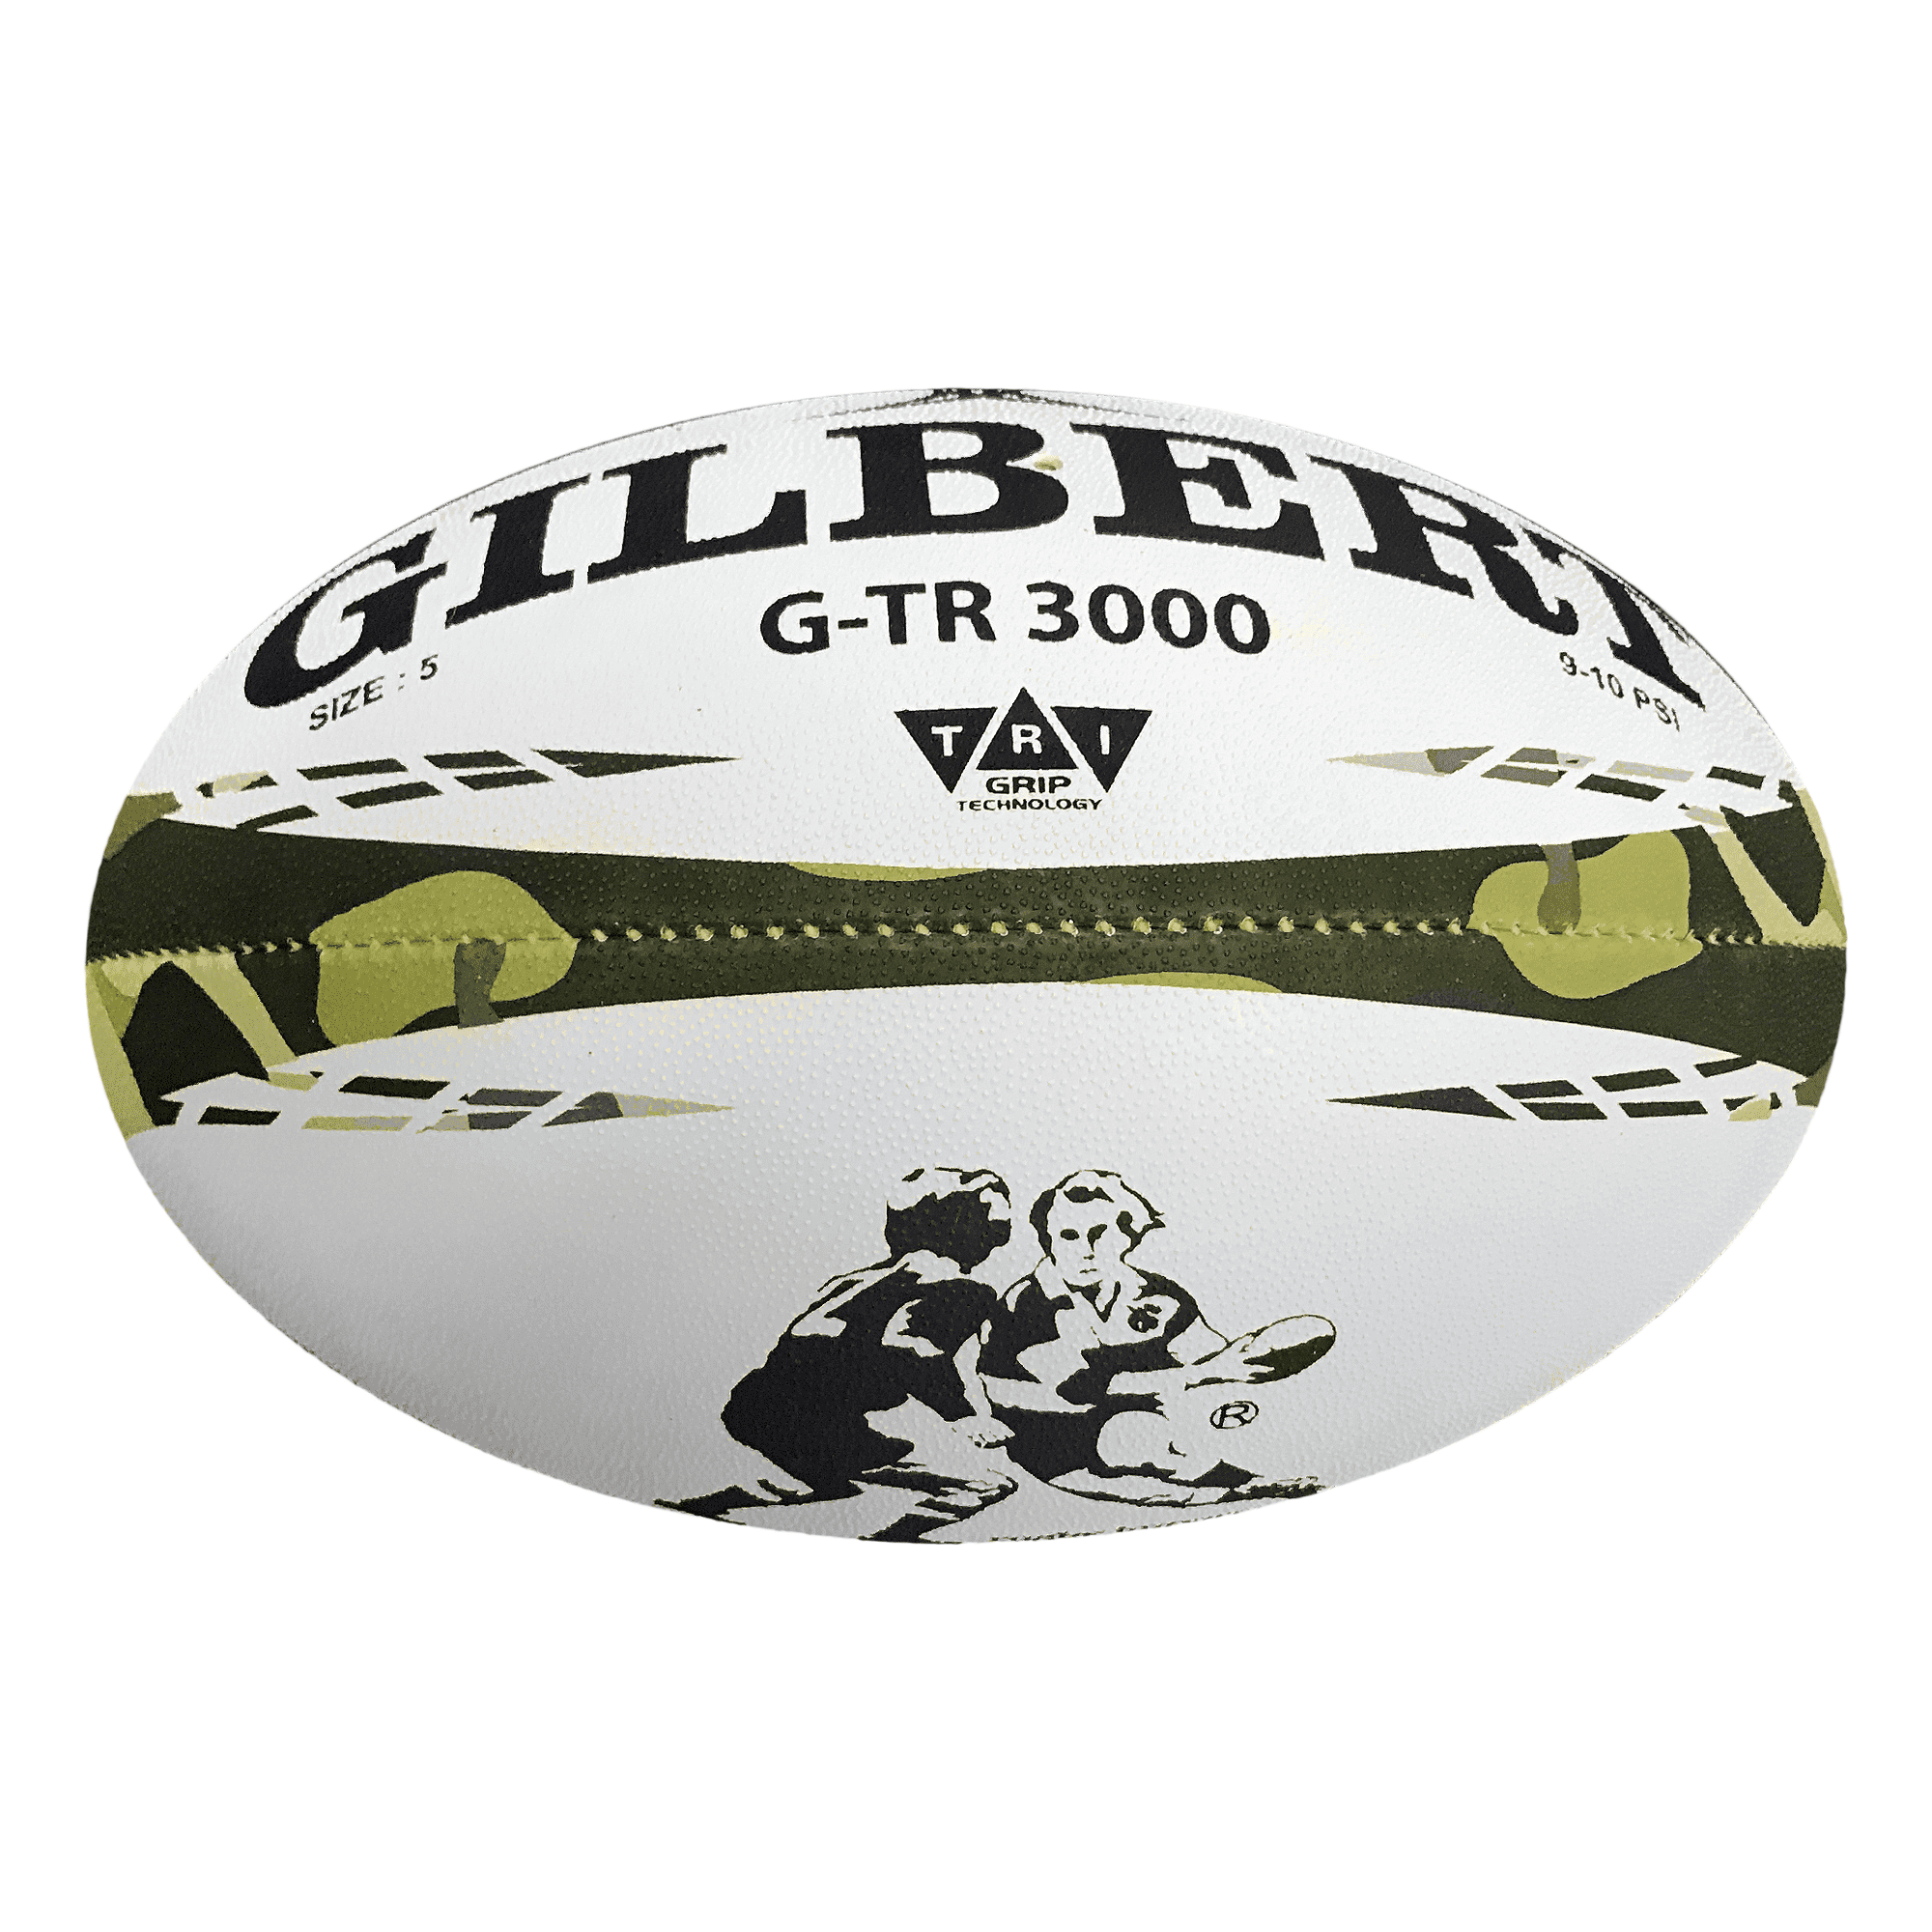 GILBERT G-TR3000 RUGBY BALL PRESENT GIFT TRAINING BALLS SIZE 3 4 5 